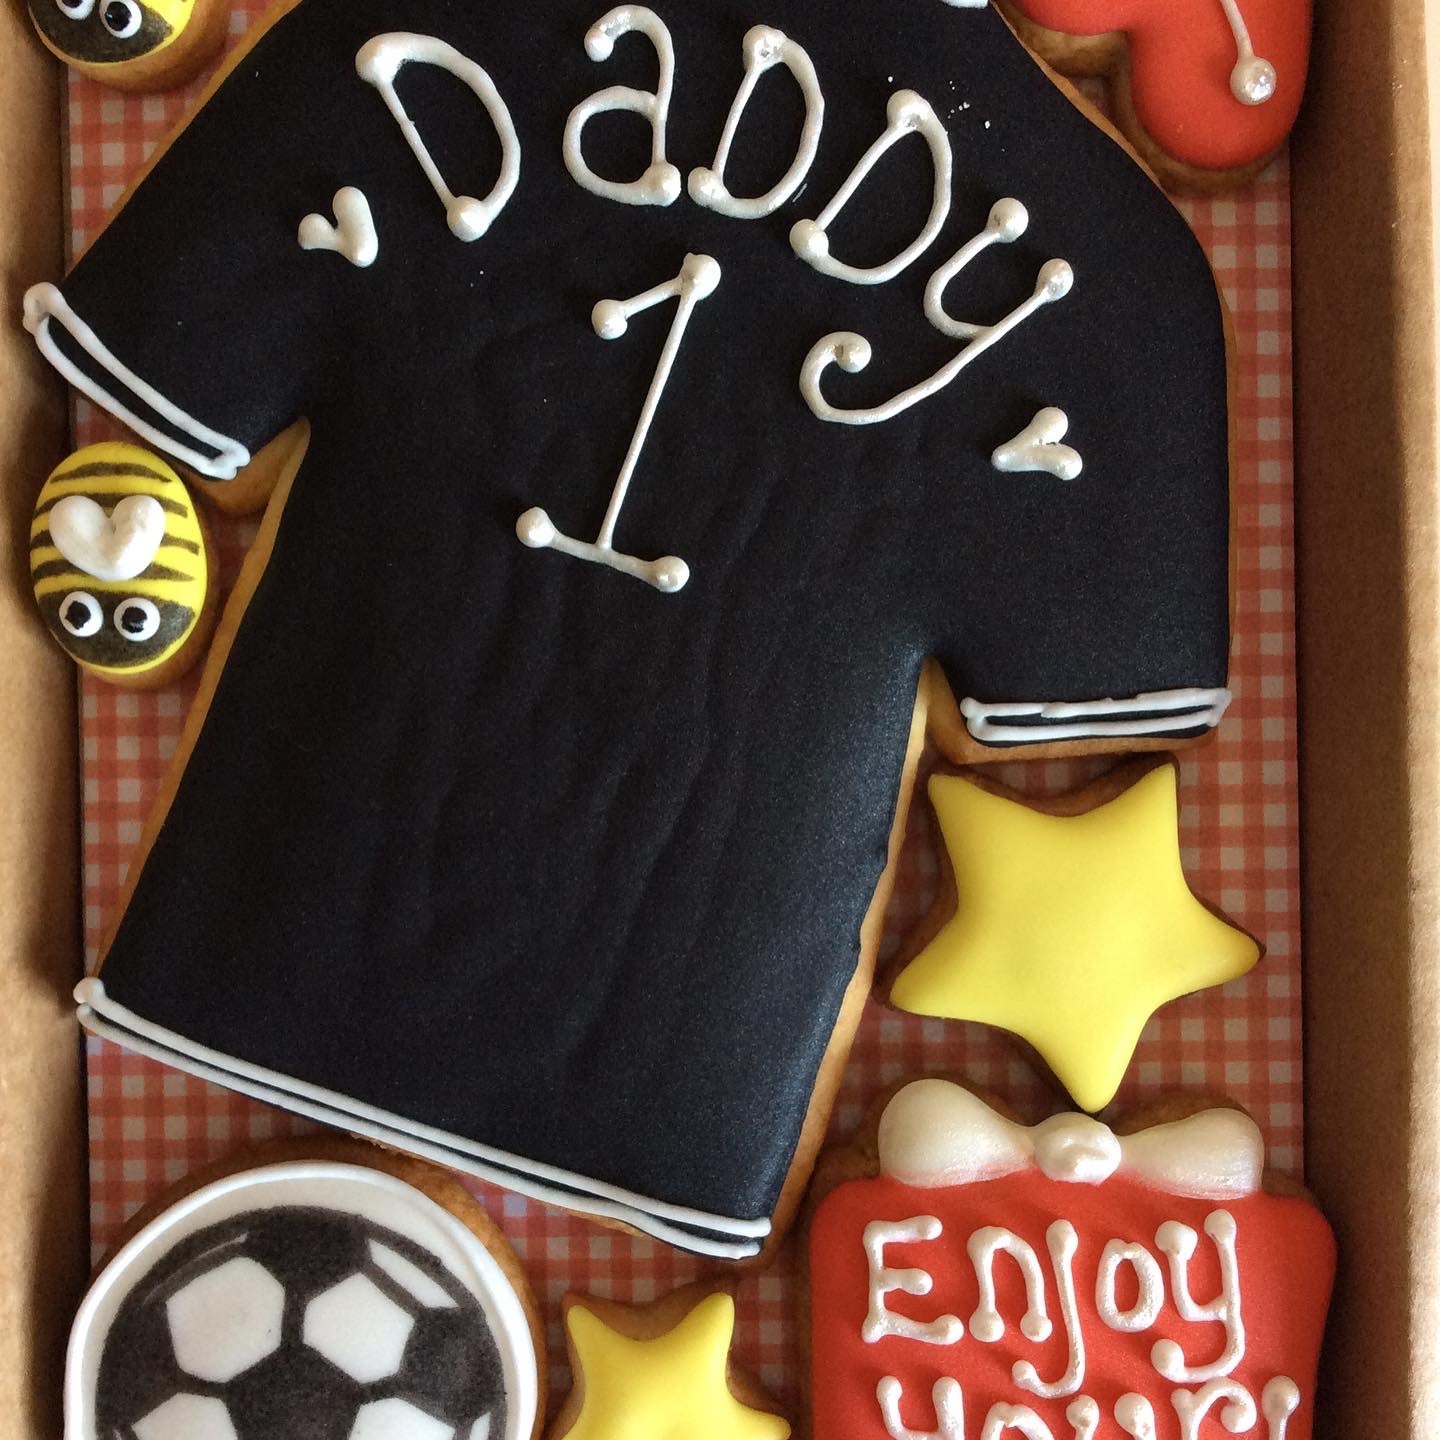 Football Shirt and Football Cookie Card (Medium)